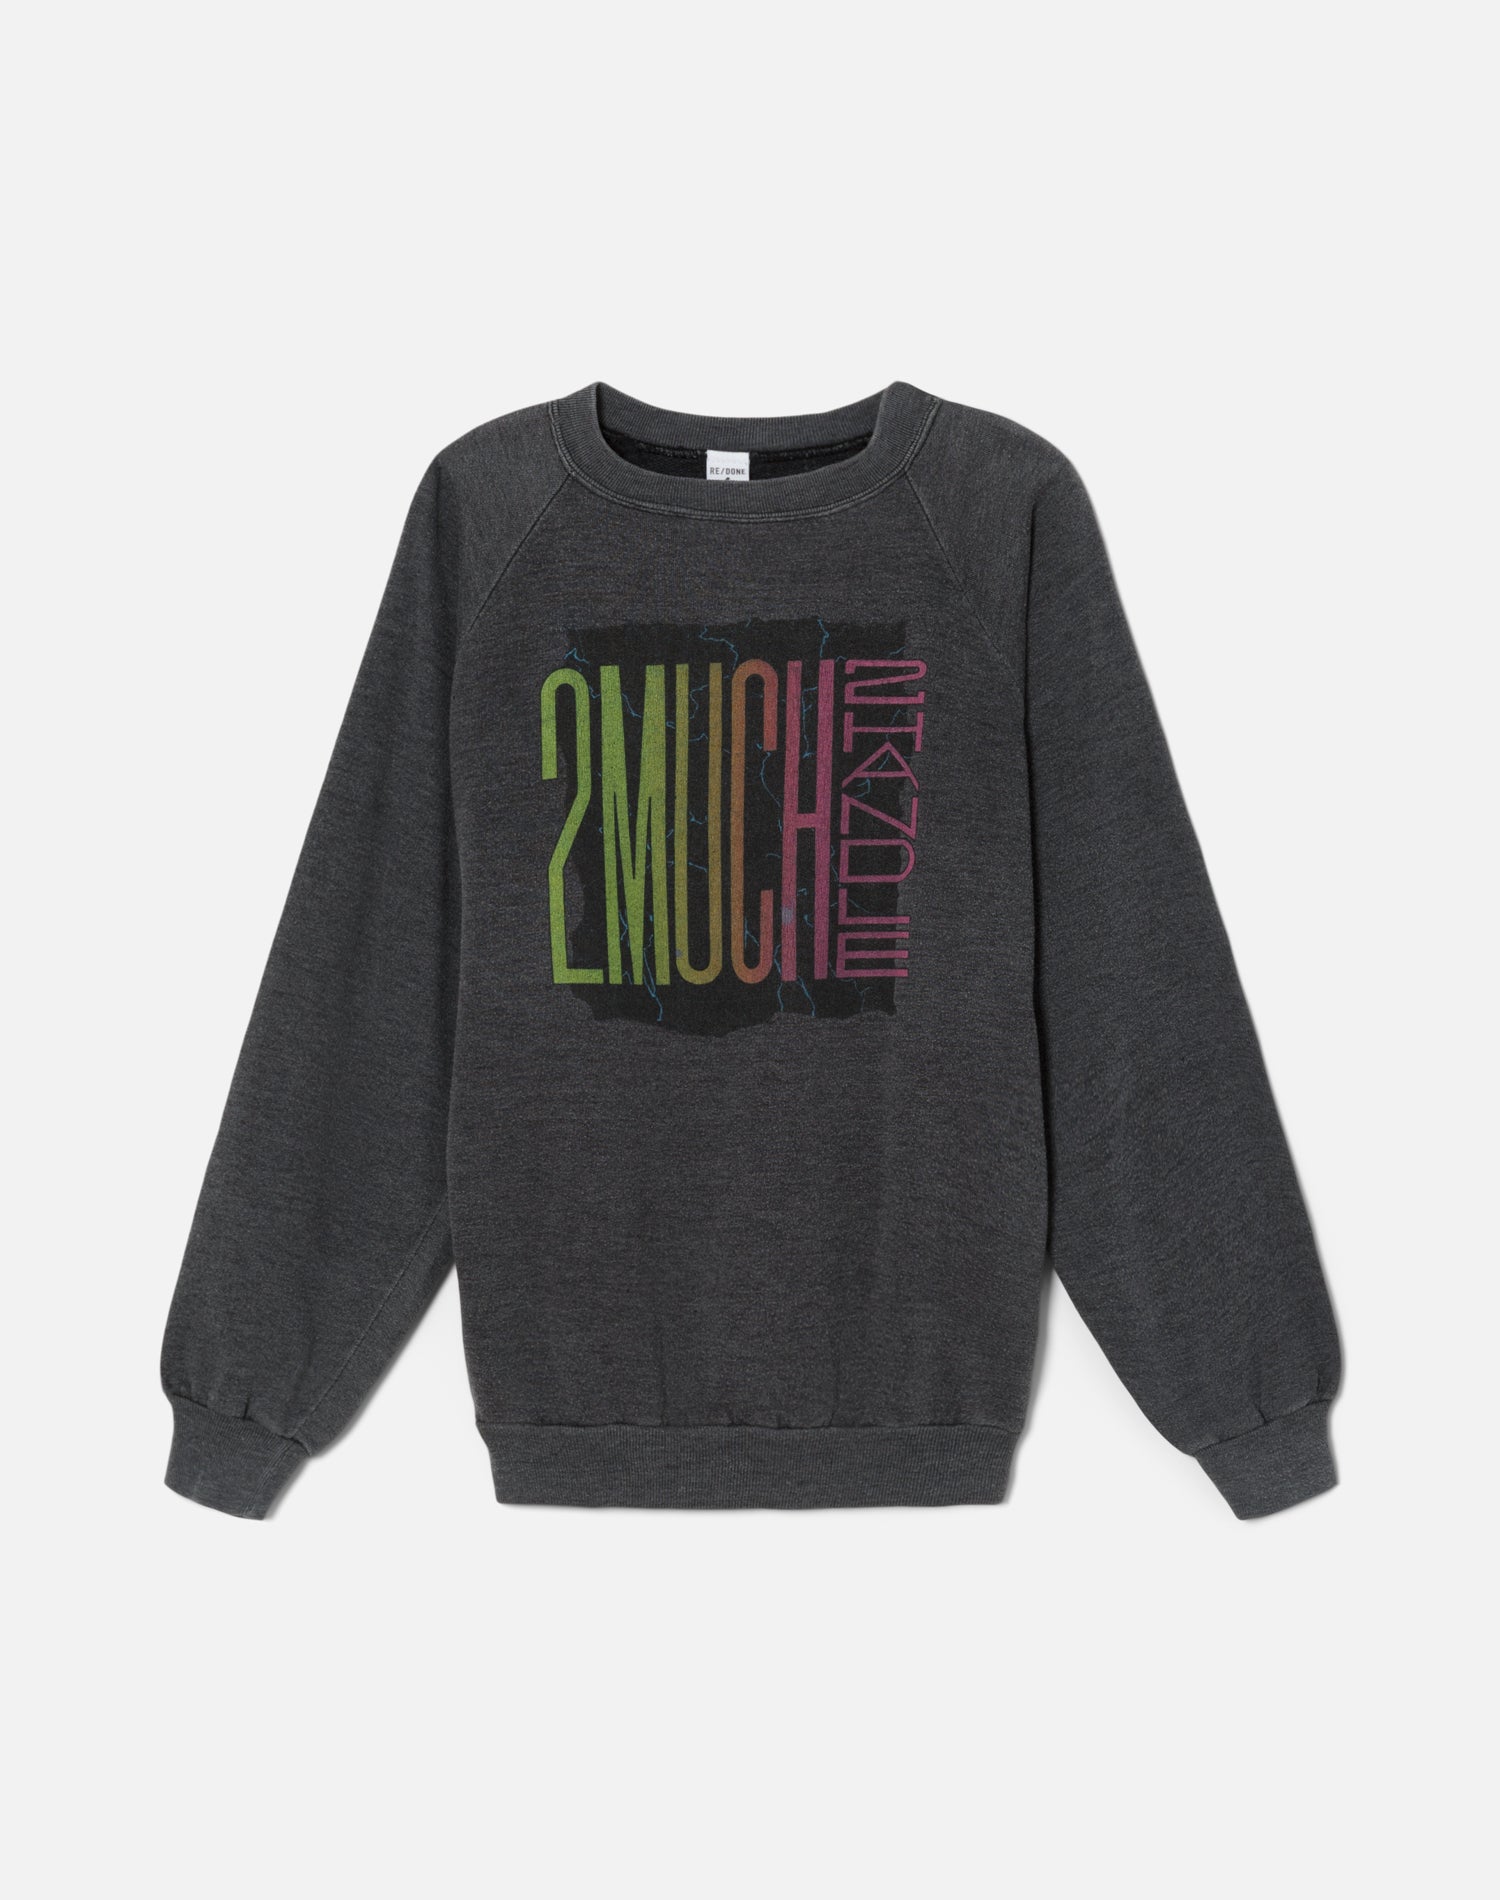 RE/DONE x Surplus Sale | Upcycled Overdye Graphic Sweatshirt